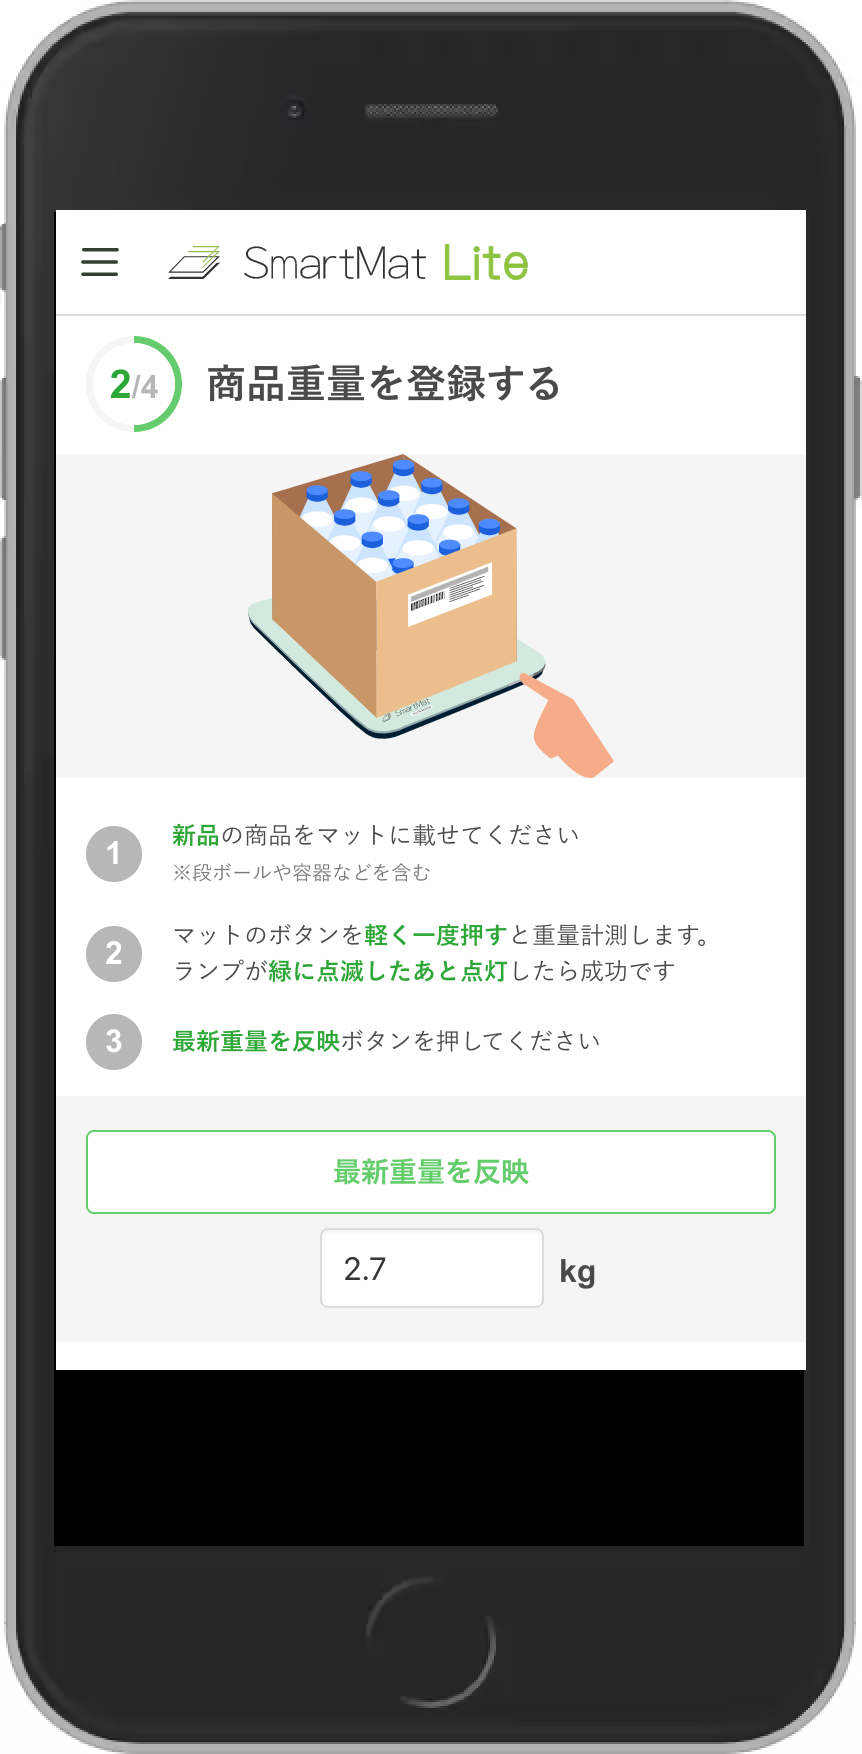 dev.lite.smartmat.work subscription regist time to buy url(iPhone 6 7 8) (2)